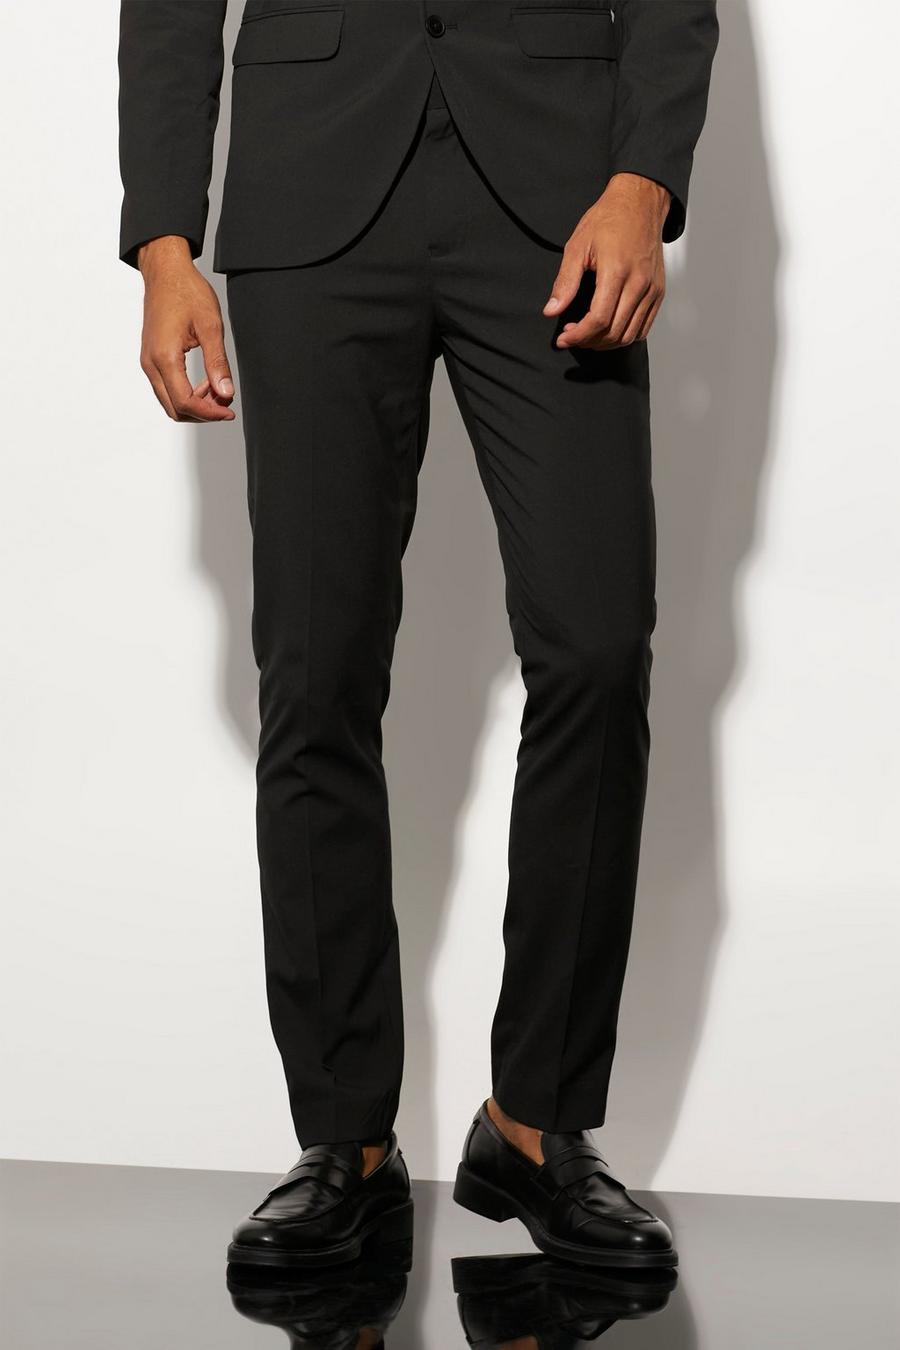 Black Skinny Suit ruffled Trousers